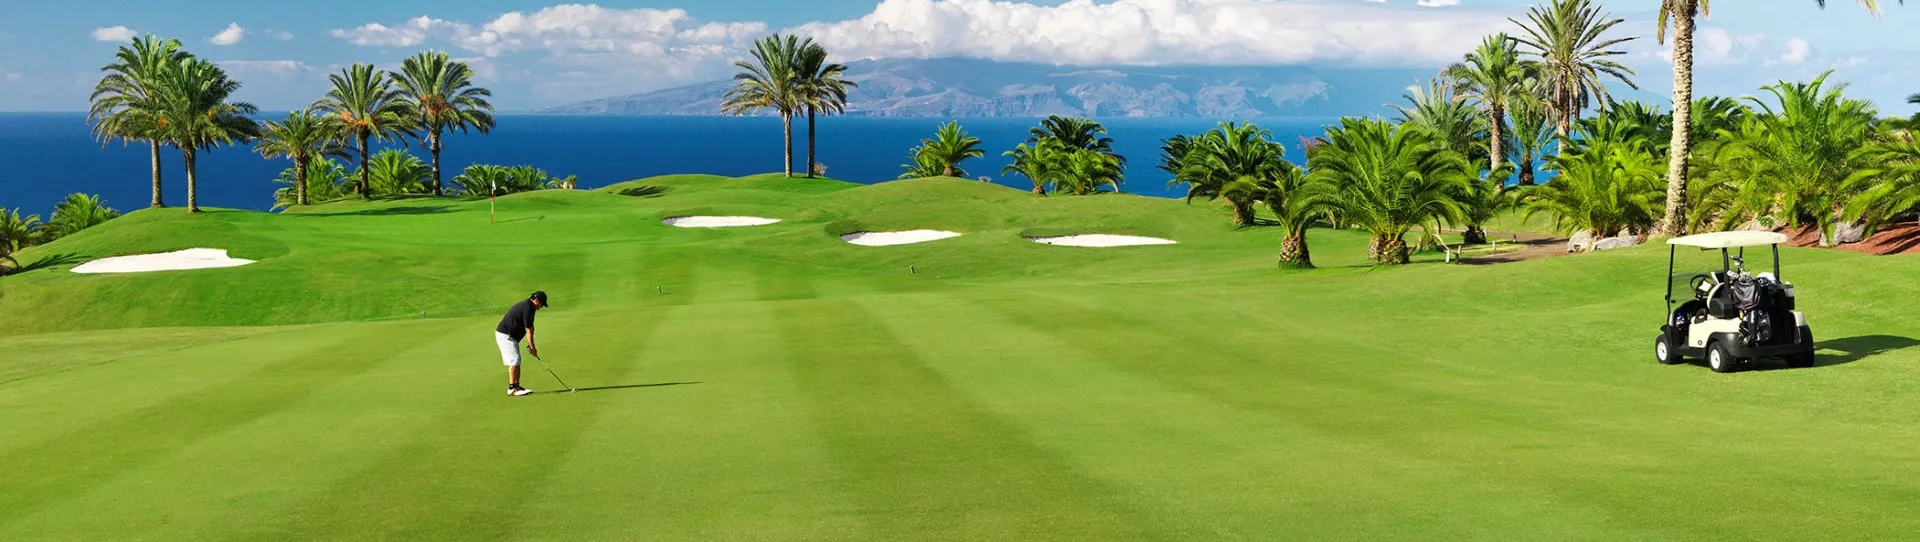 Abama Golf Course, best on green fees, Spain, Canary Islands